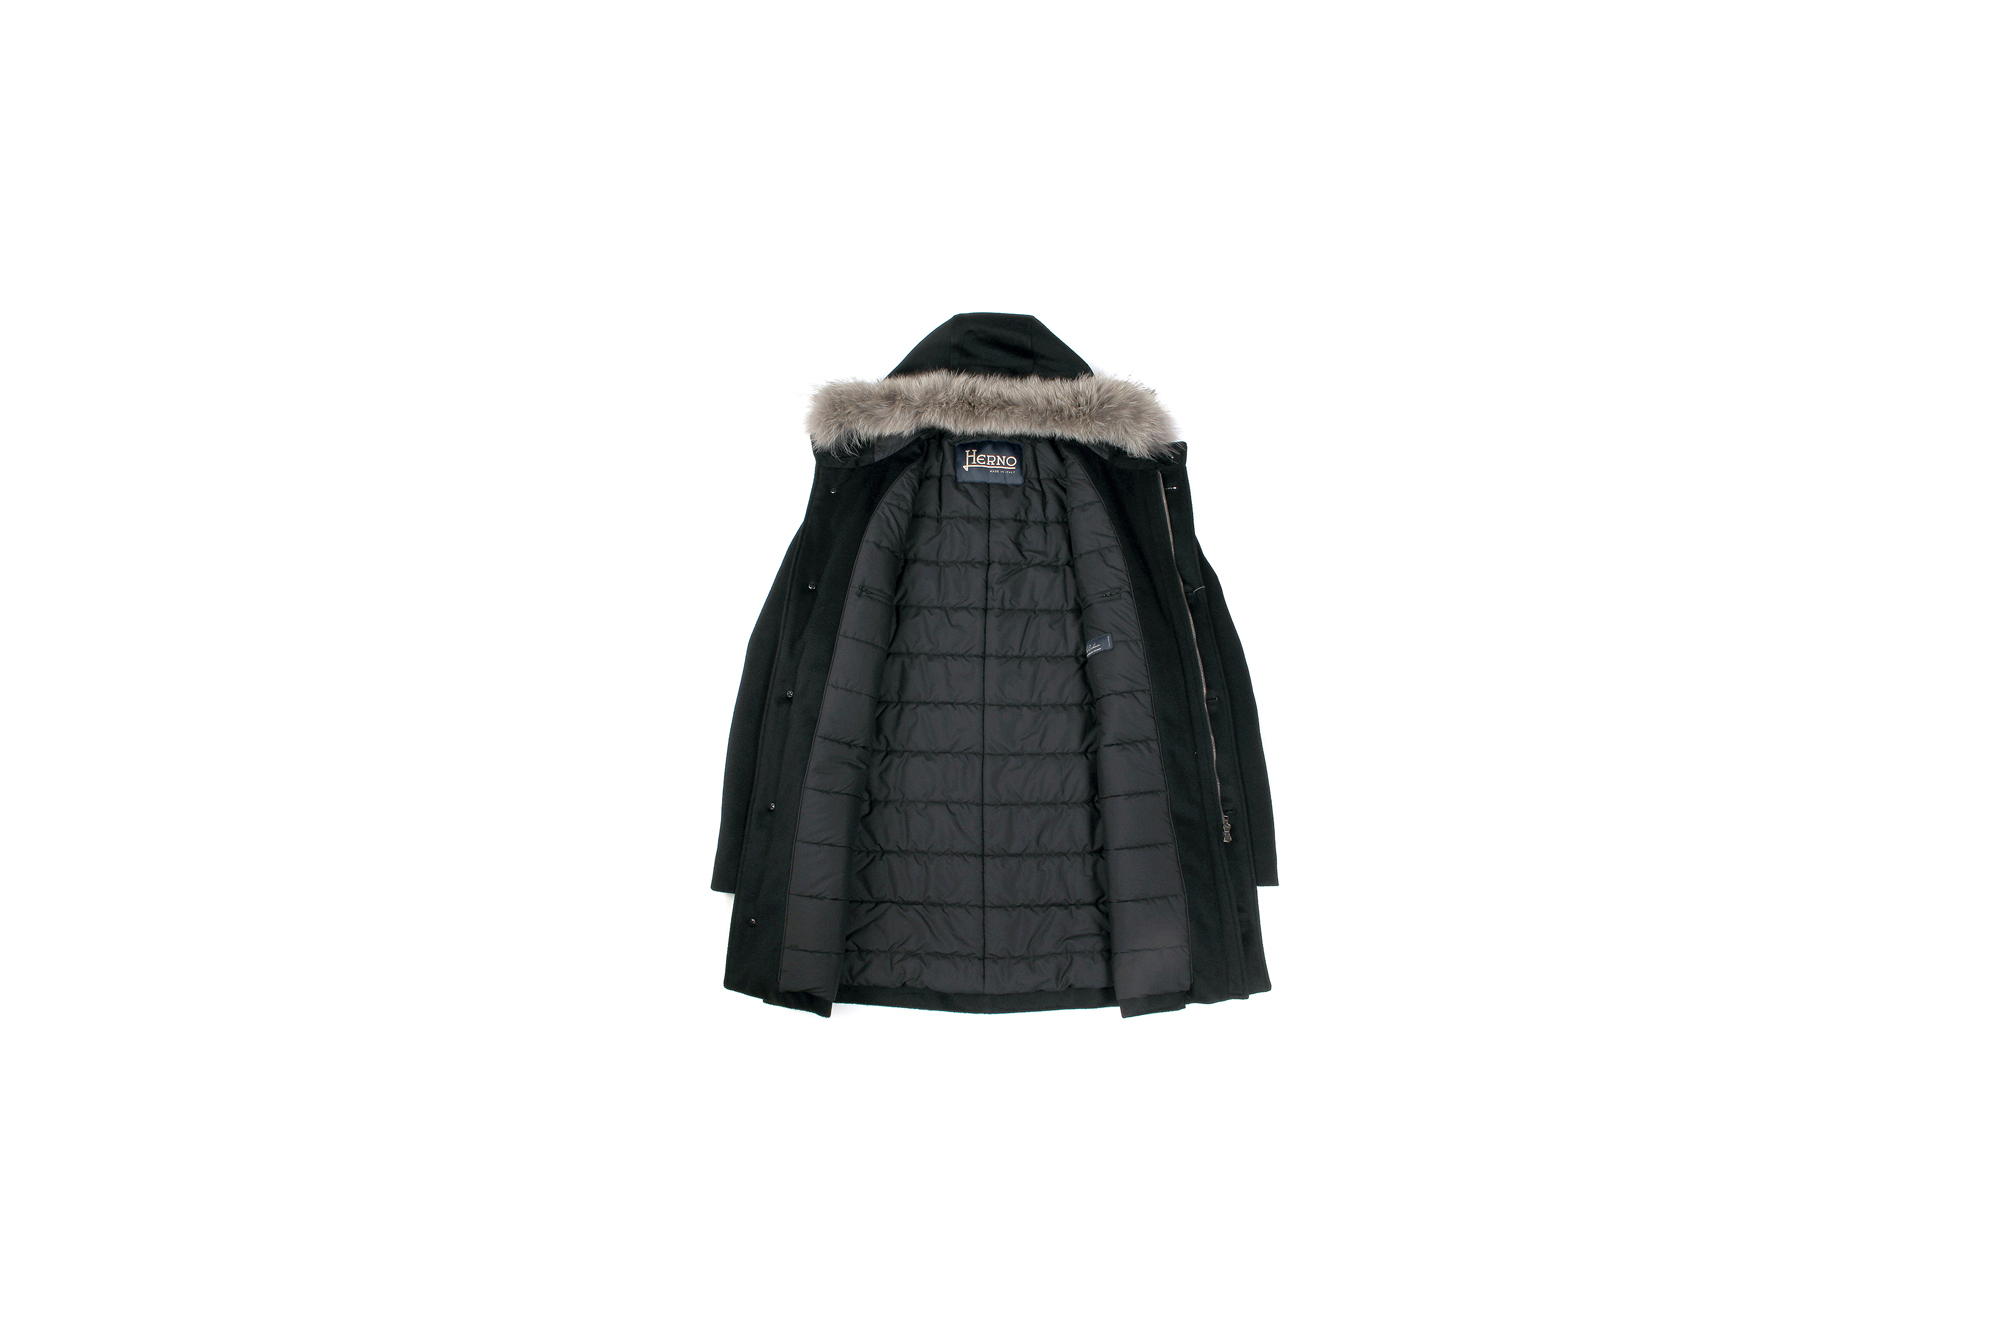 HERNO(ヘルノ) N-3B Cashmere coat (カシミア コート) LUIGI COLOMBO (ルイージ・コロンボ) 撥水